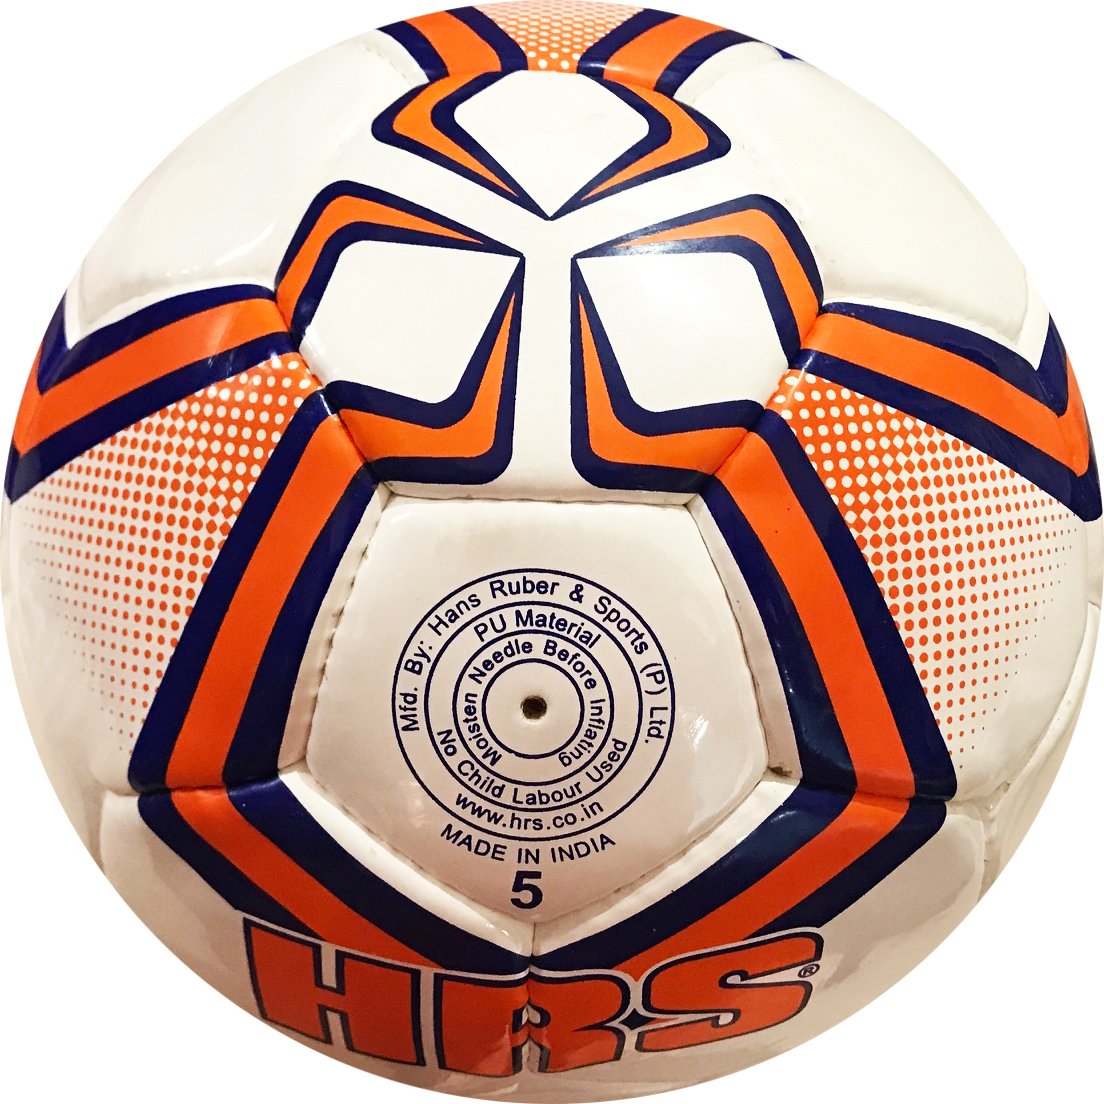 HRS Goal Imported PU Professional Match Football - Size 5 (Orange/Blue) - Best Price online Prokicksports.com